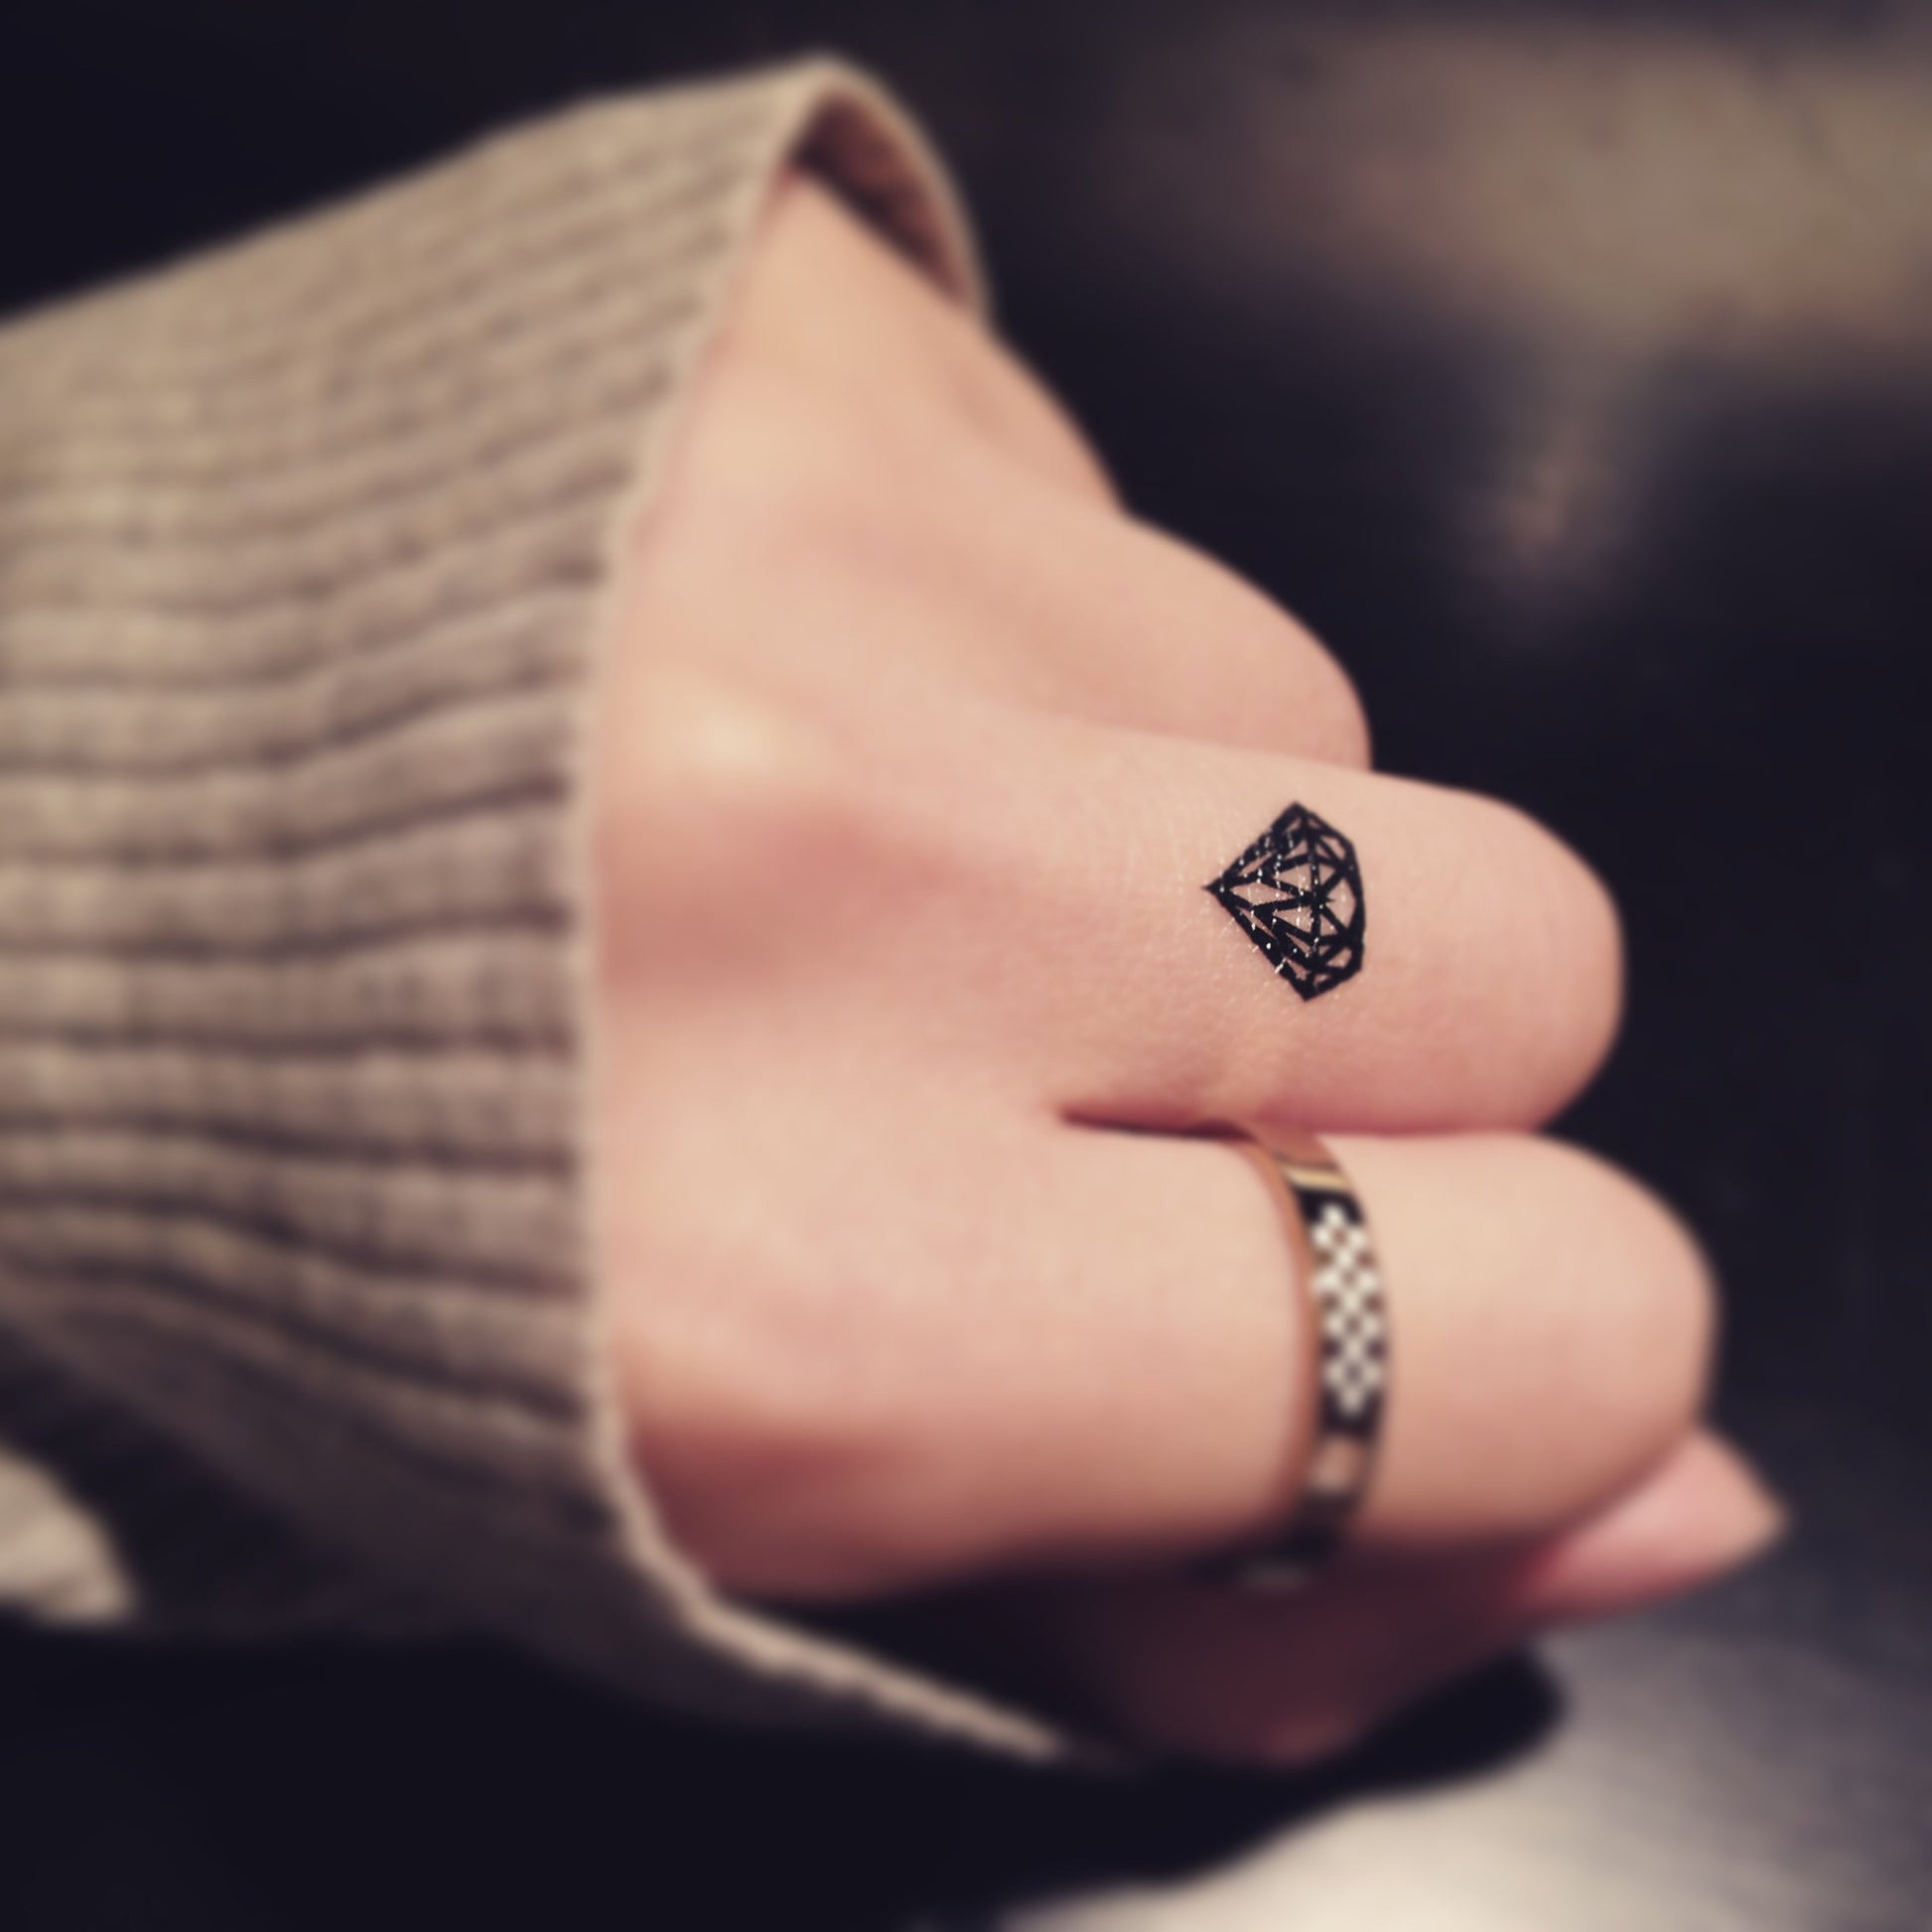 fake tiny little black diamond engagement ring marriage wedding band minimalist temporary tattoo sticker design idea on finger